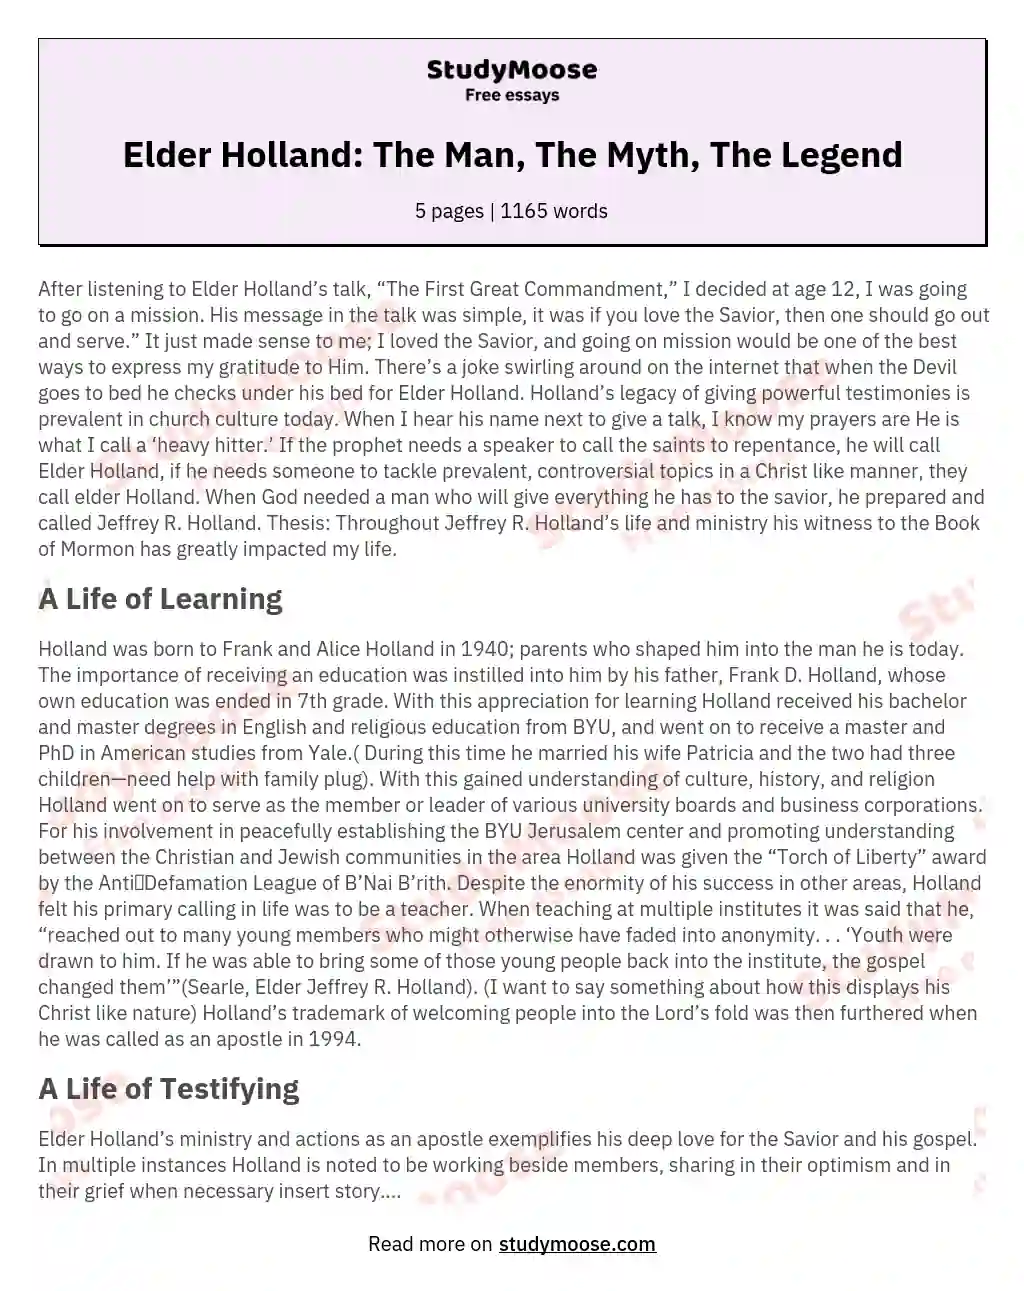 Elder Holland: The Man, The Myth, The Legend essay